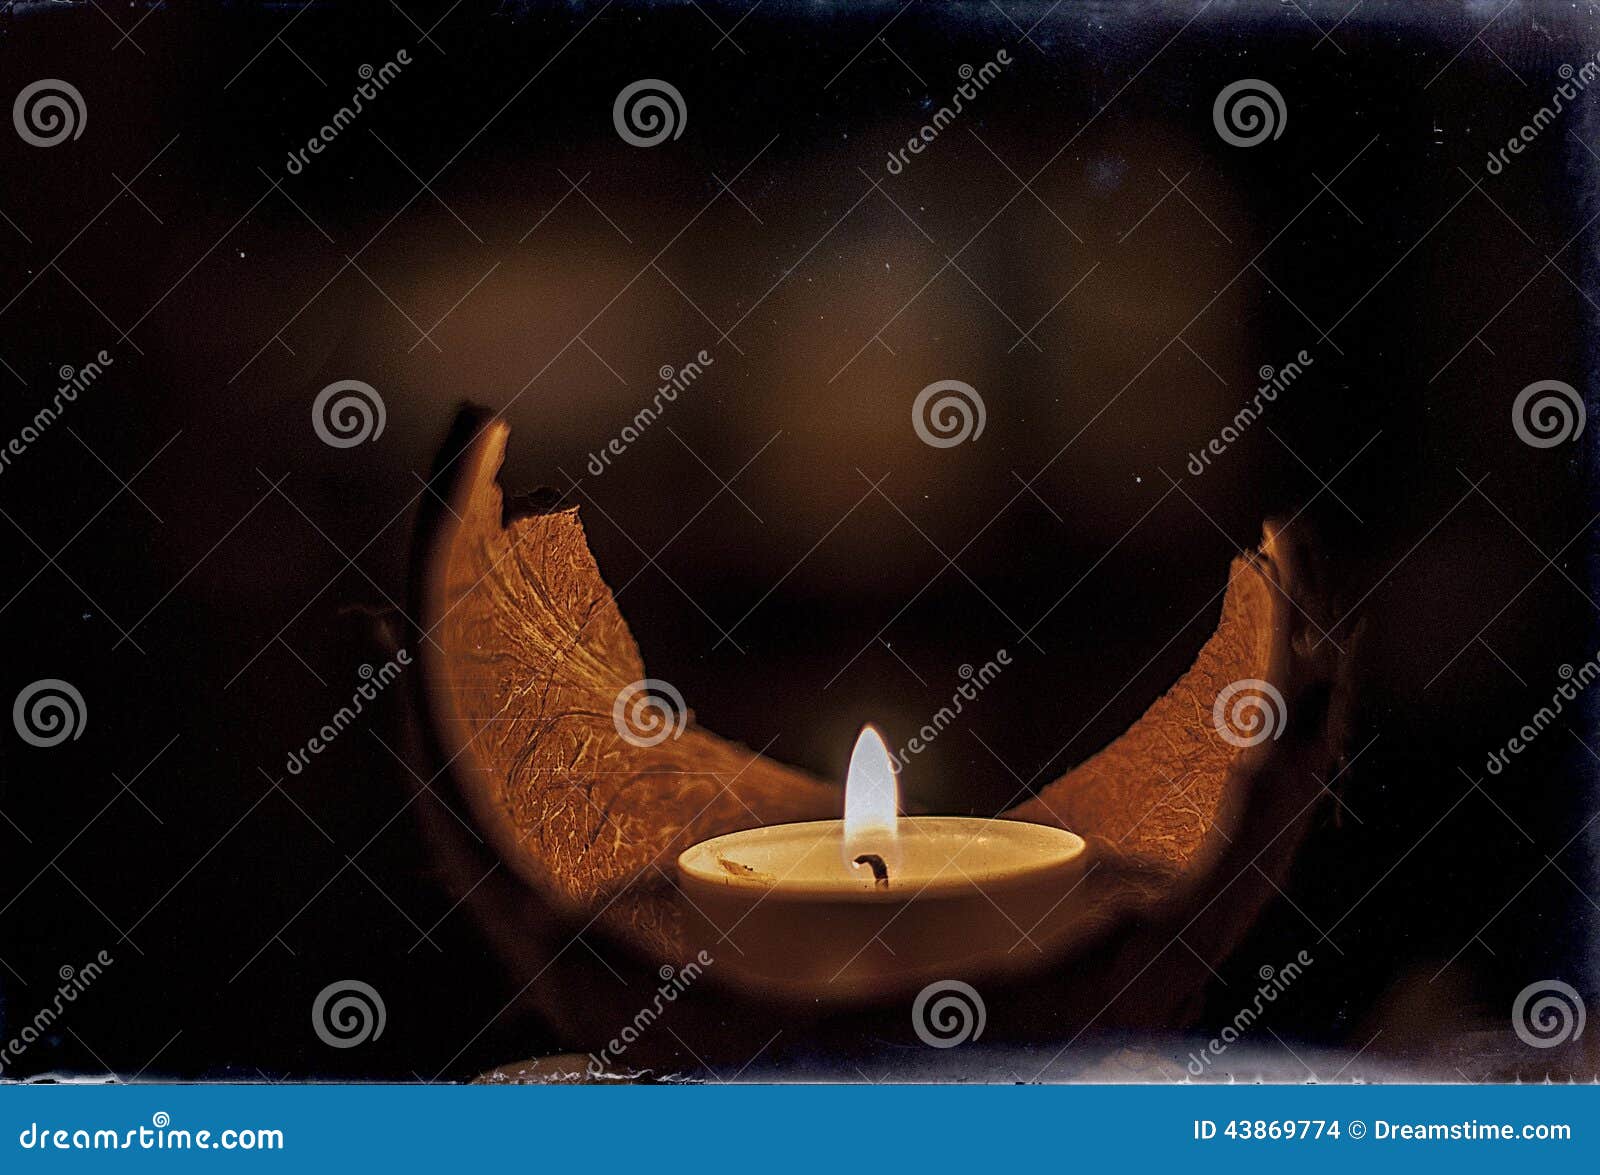 Flame of Hope stock photo. Image of details, burning - 43869774